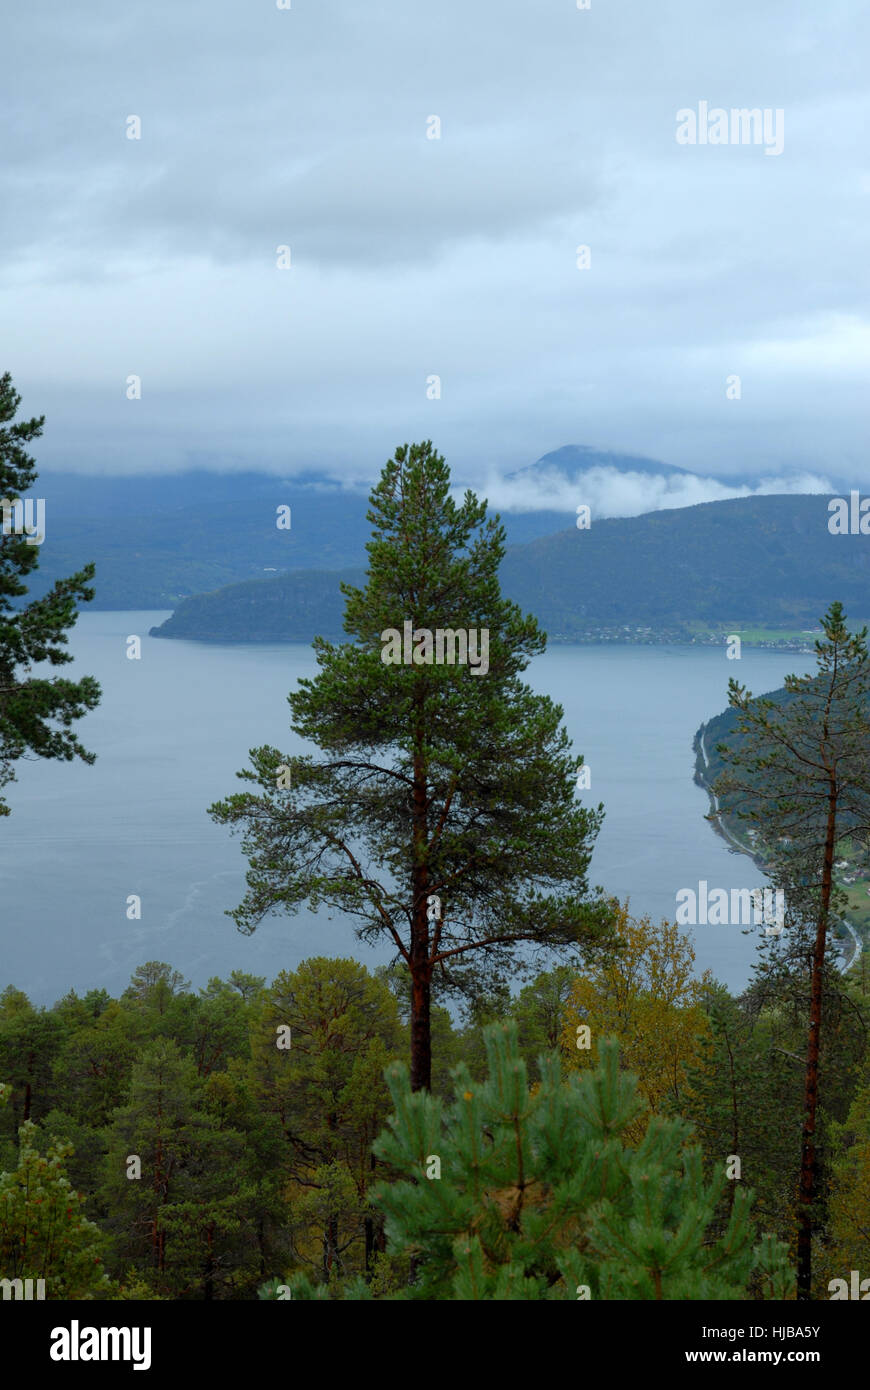 Arbre, arbres, Norvège, fjord, Firth, montagne, banque, nuages, arbres, rive, arbres, Banque D'Images